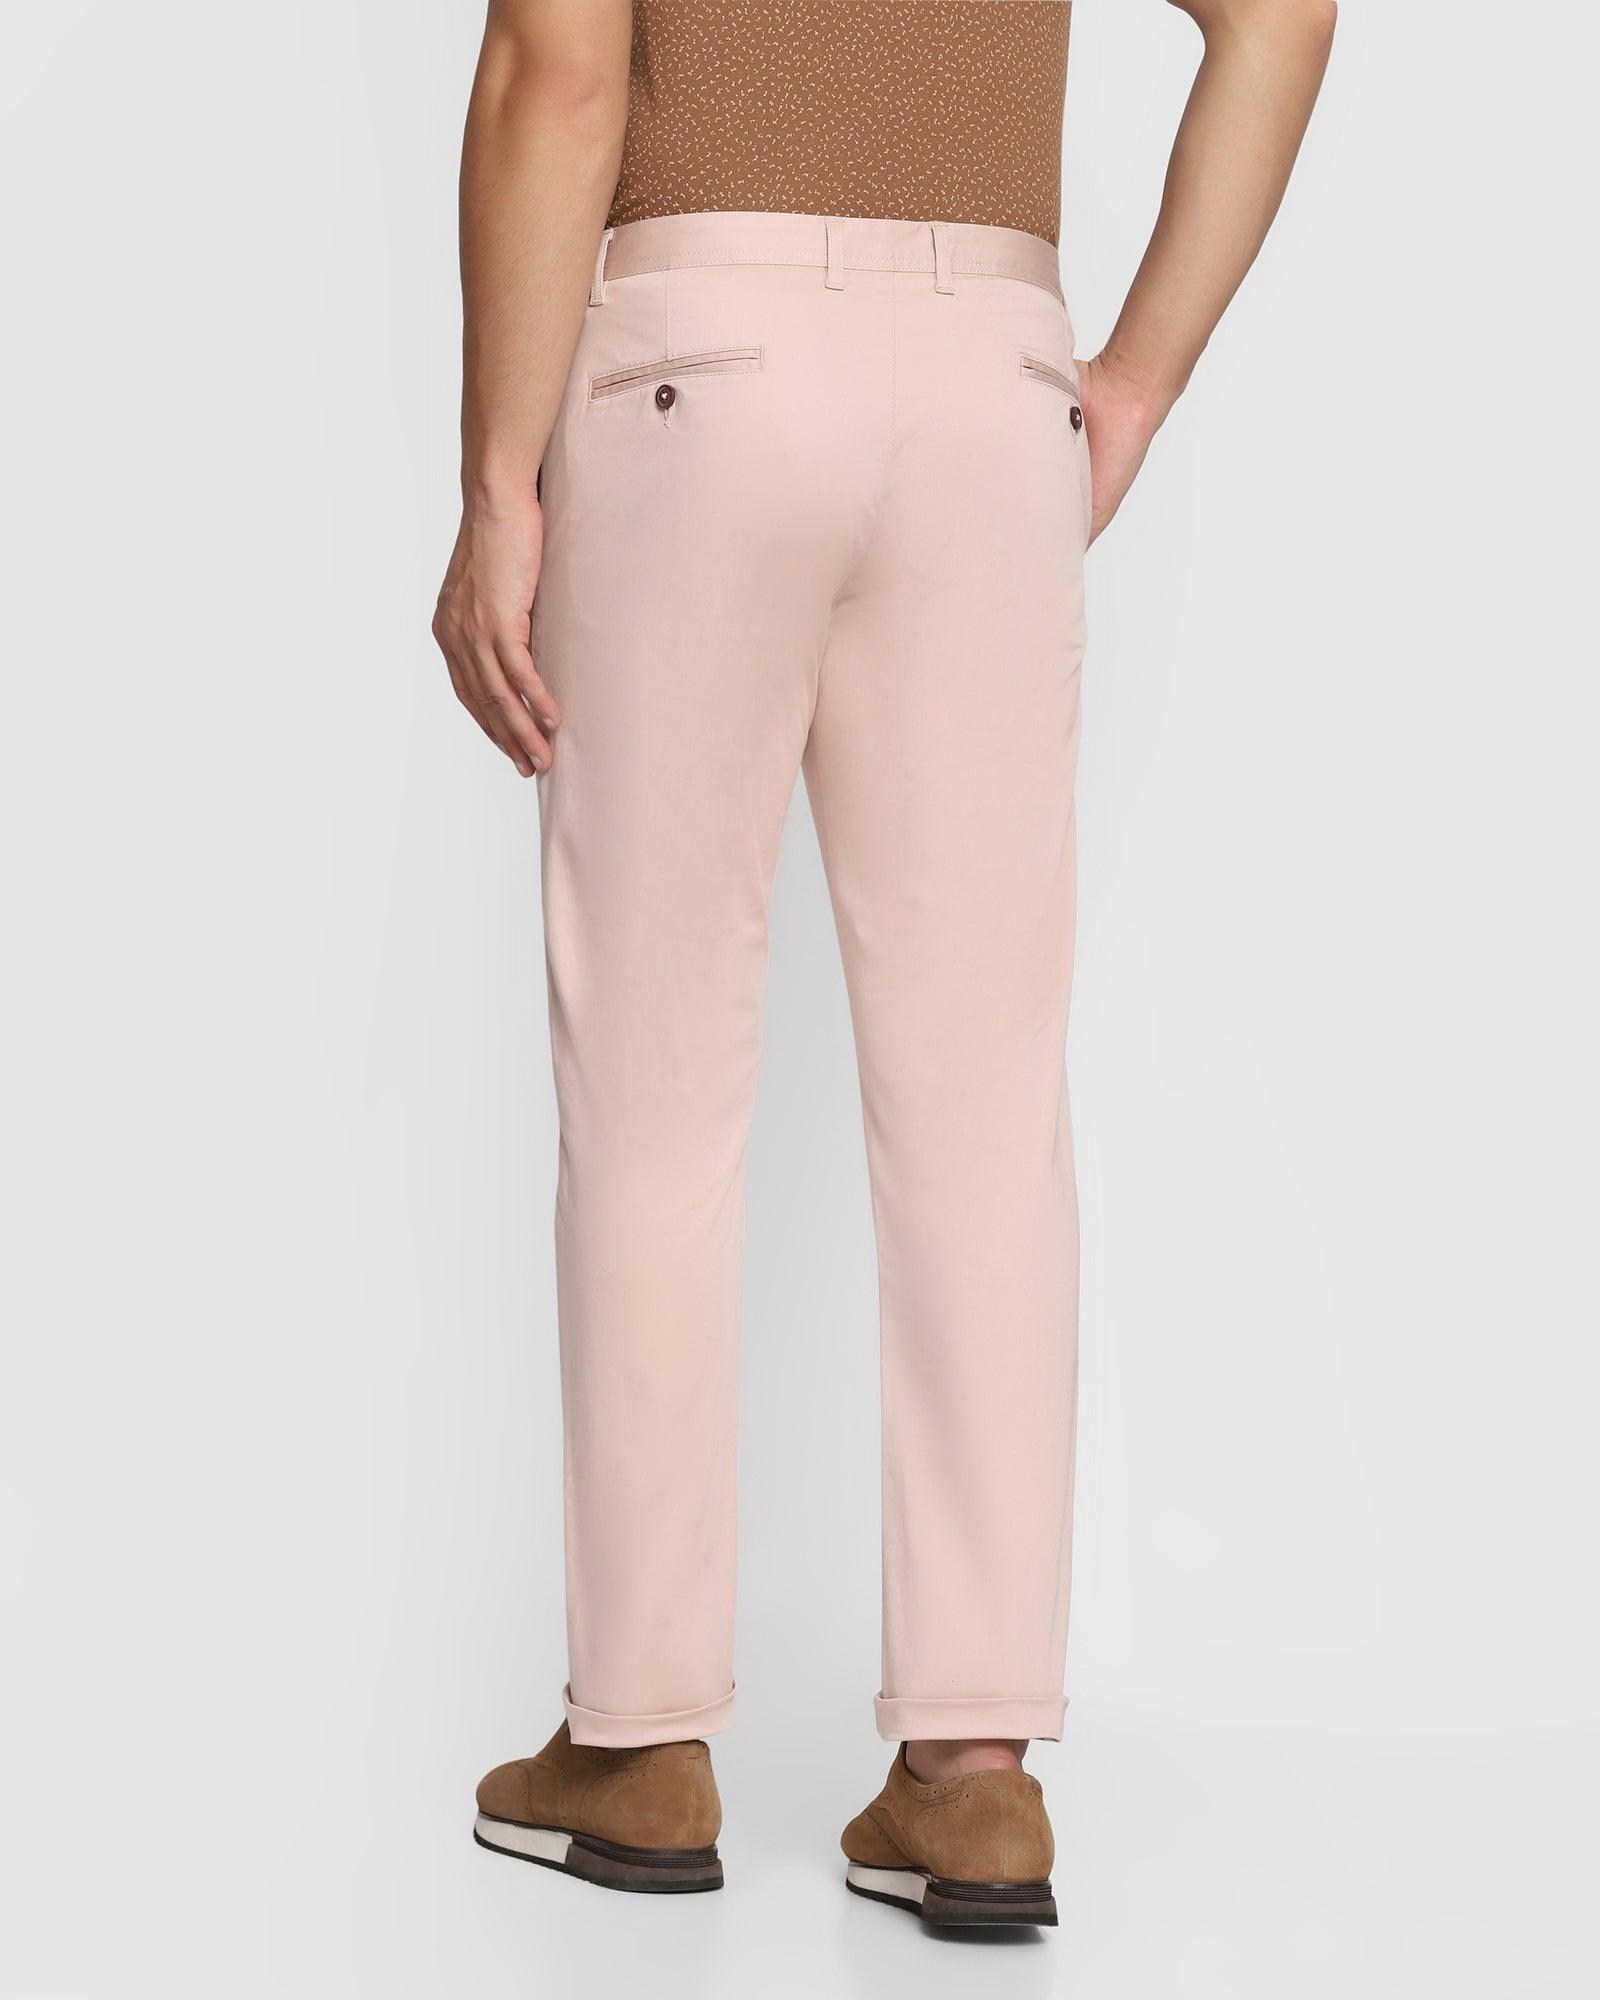 Slim Comfort B-95 Casual Light Pink Solid Khakis - Mark